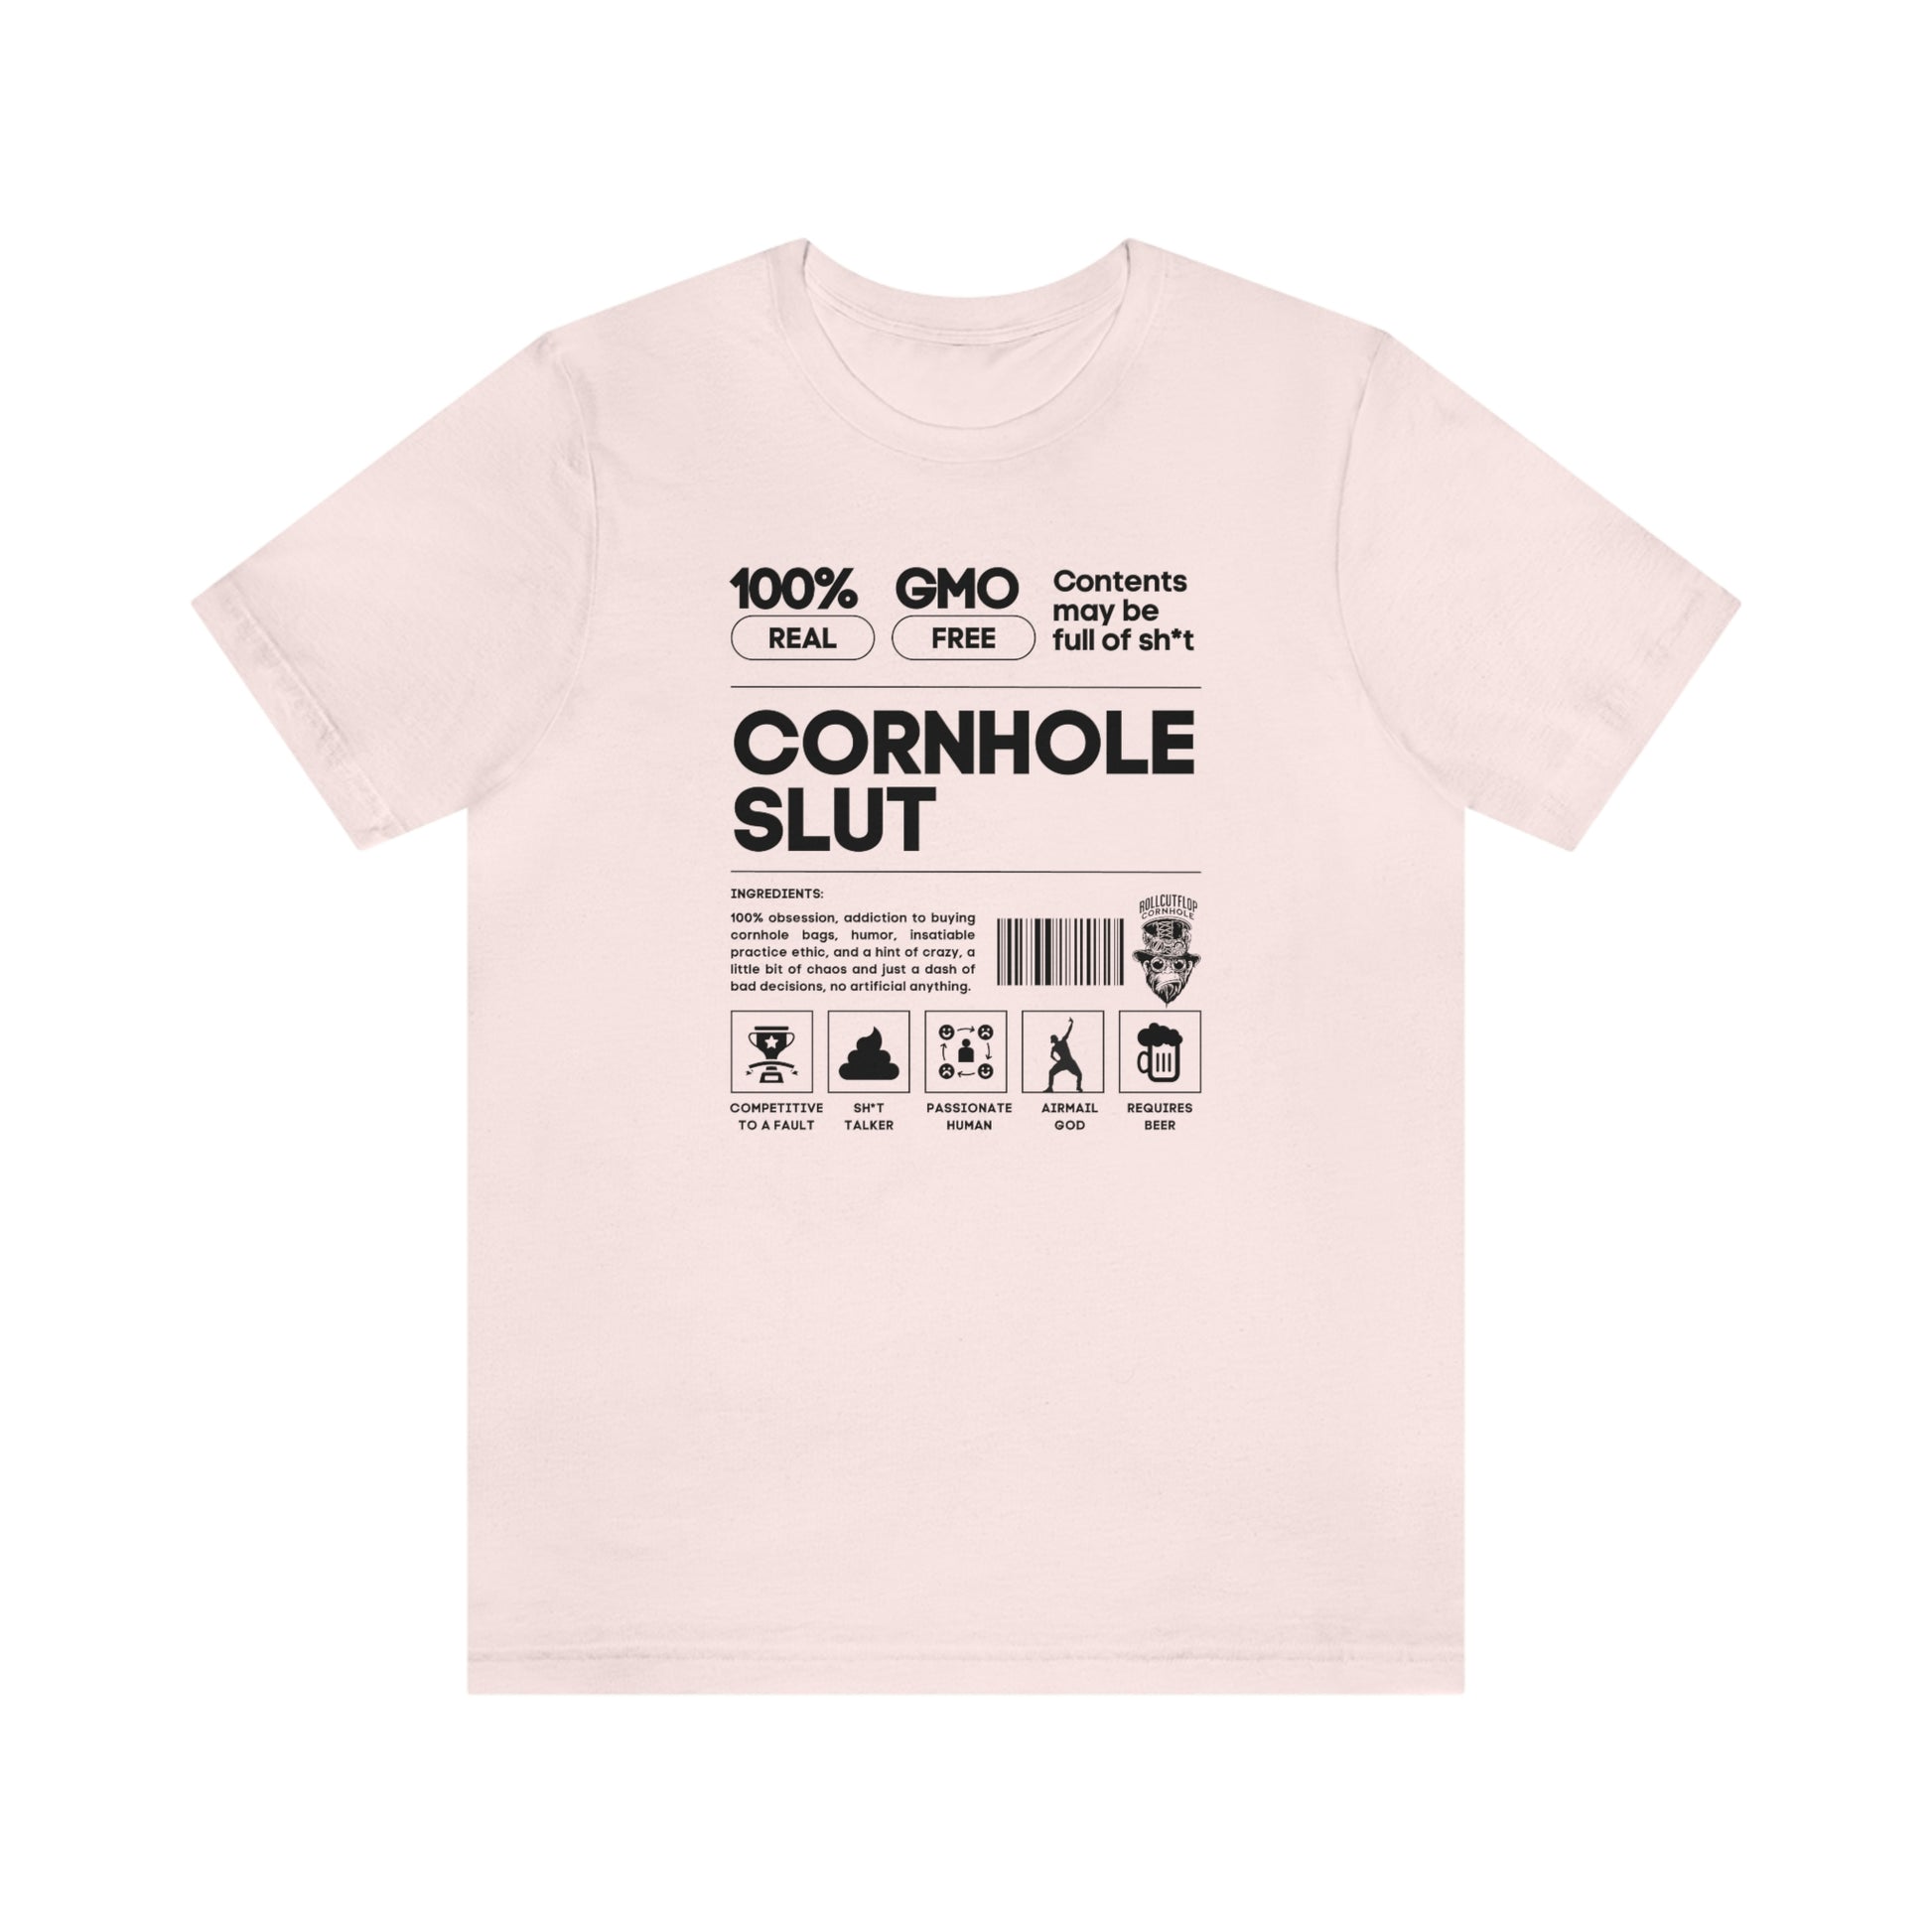 Cornhole Slut Unisex Jersey Soft Pink Tee - Cornhole Obsession Label & Roll Cut Flop Cornhole Barcode